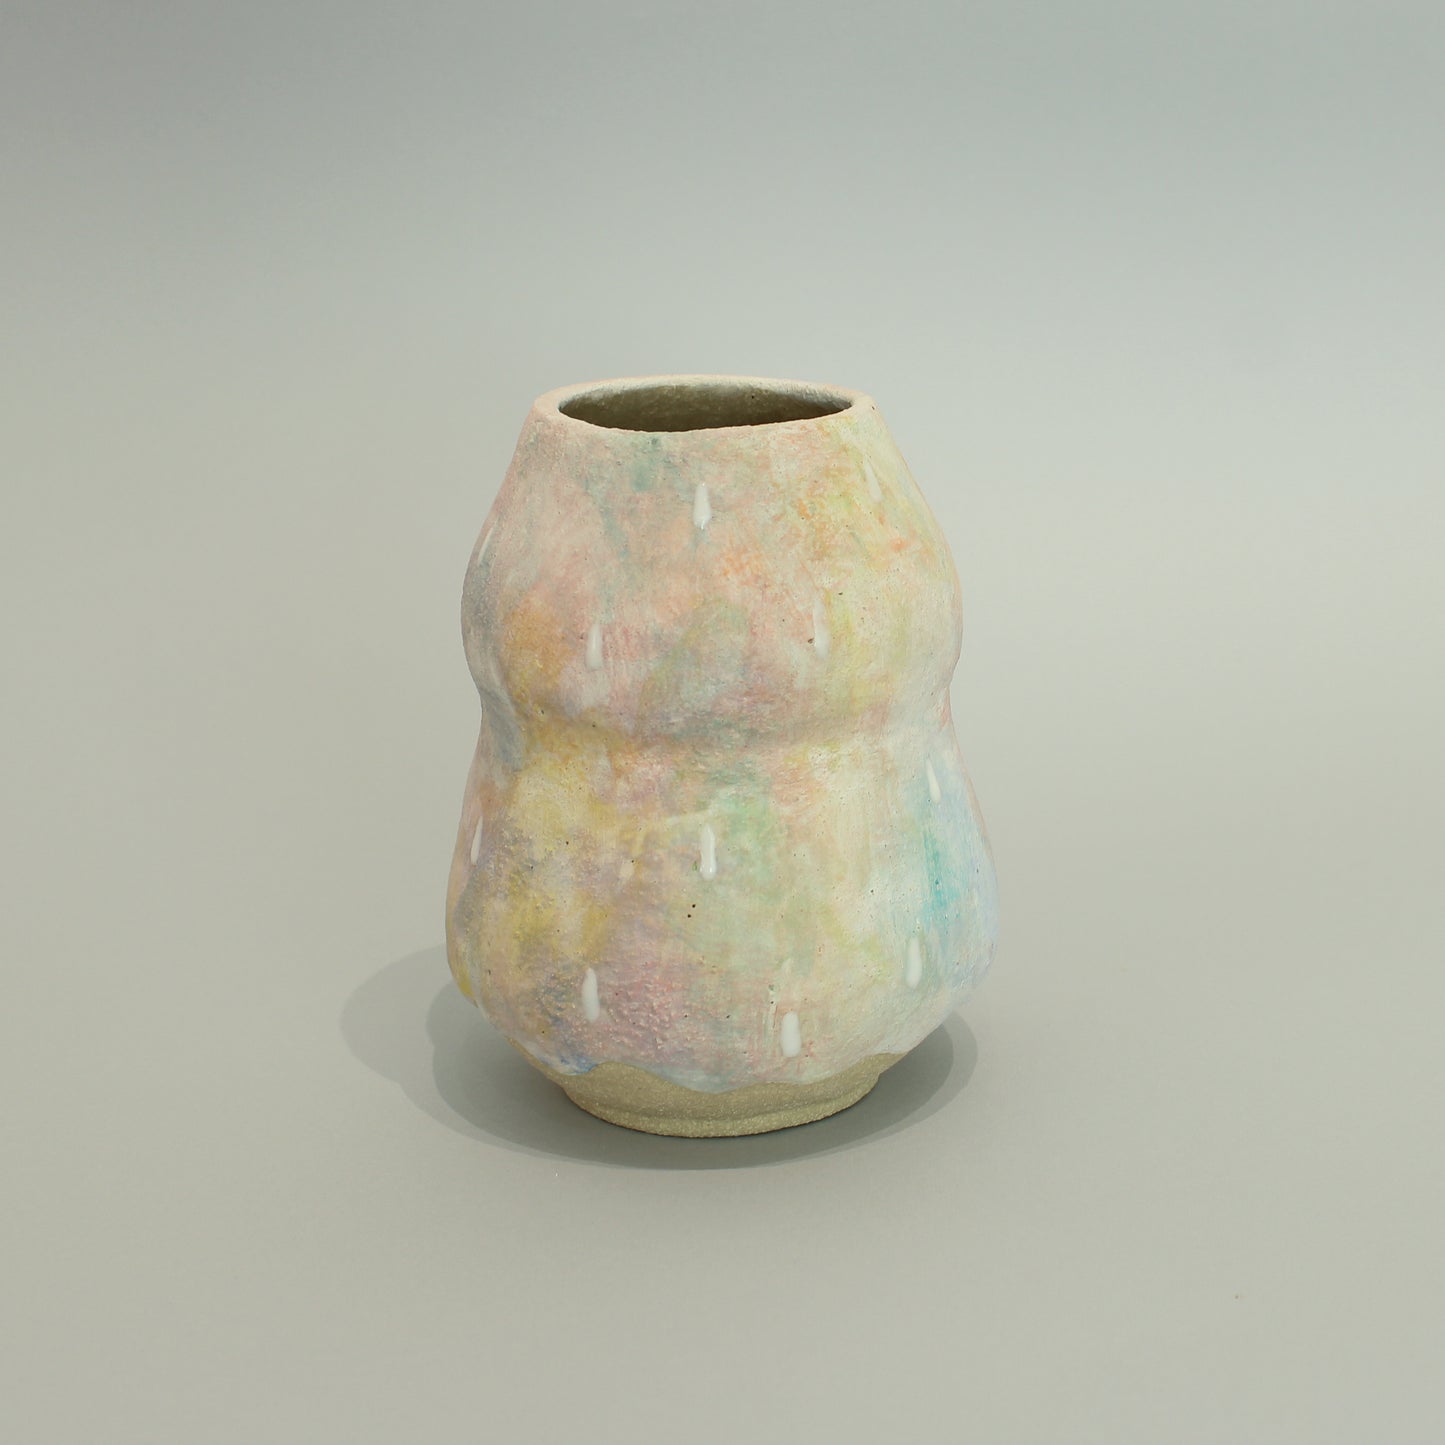 melty pierrot vase one of a kind - polka pop pi sundae